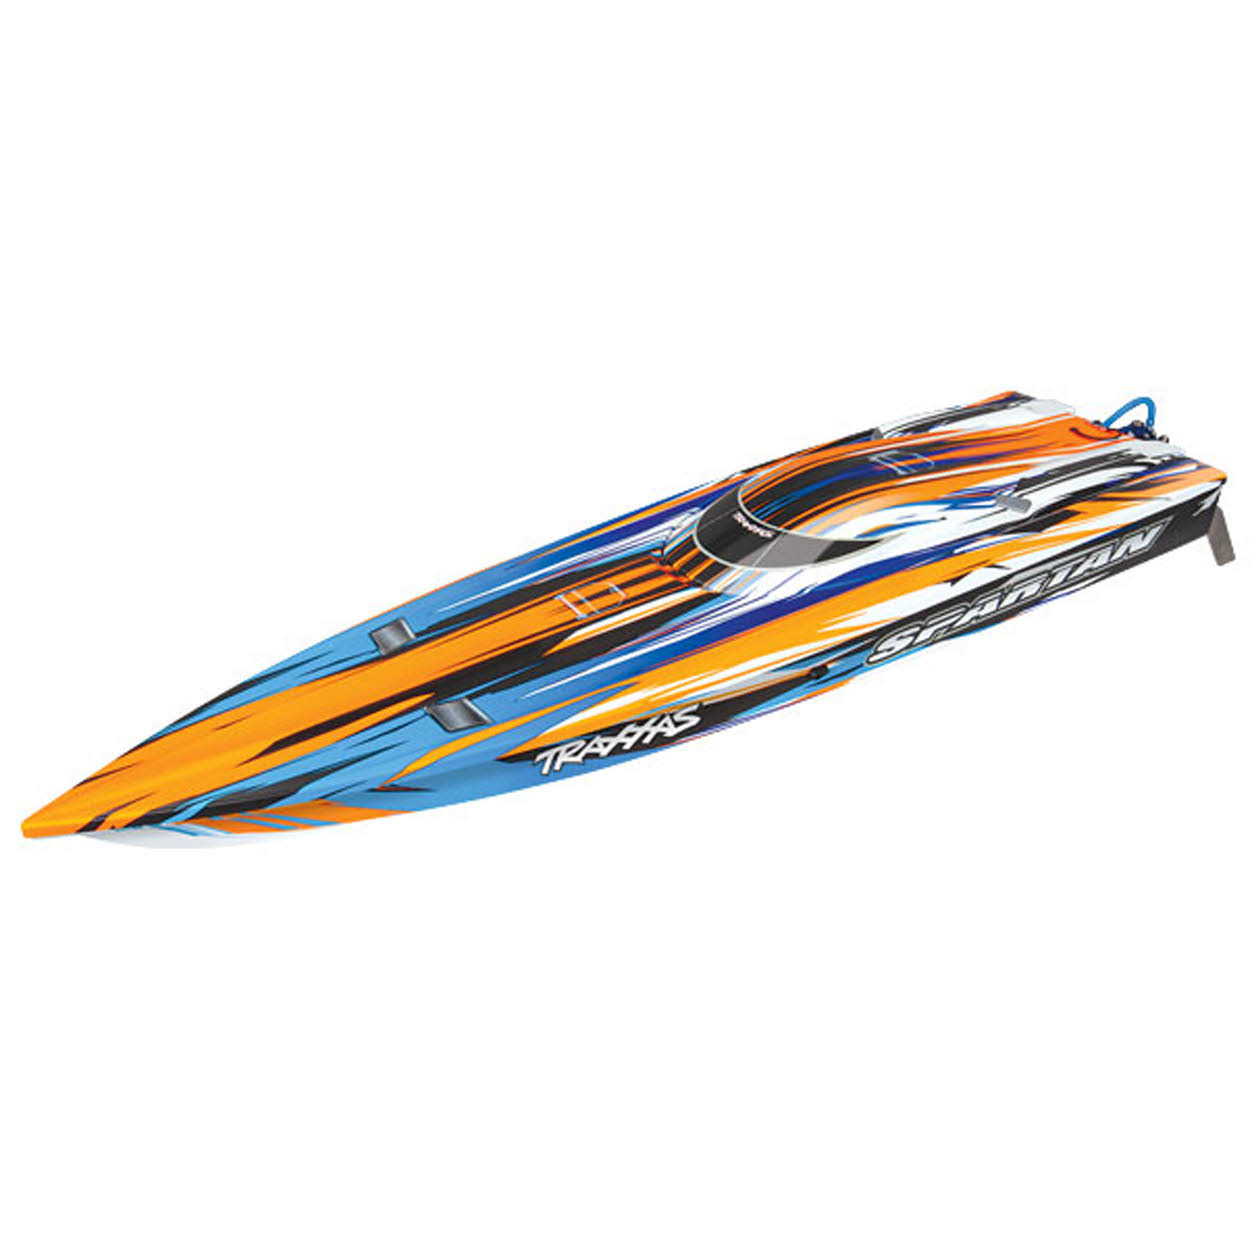 Traxxas 57076-4 Spartan Brushless Race Boat Orange